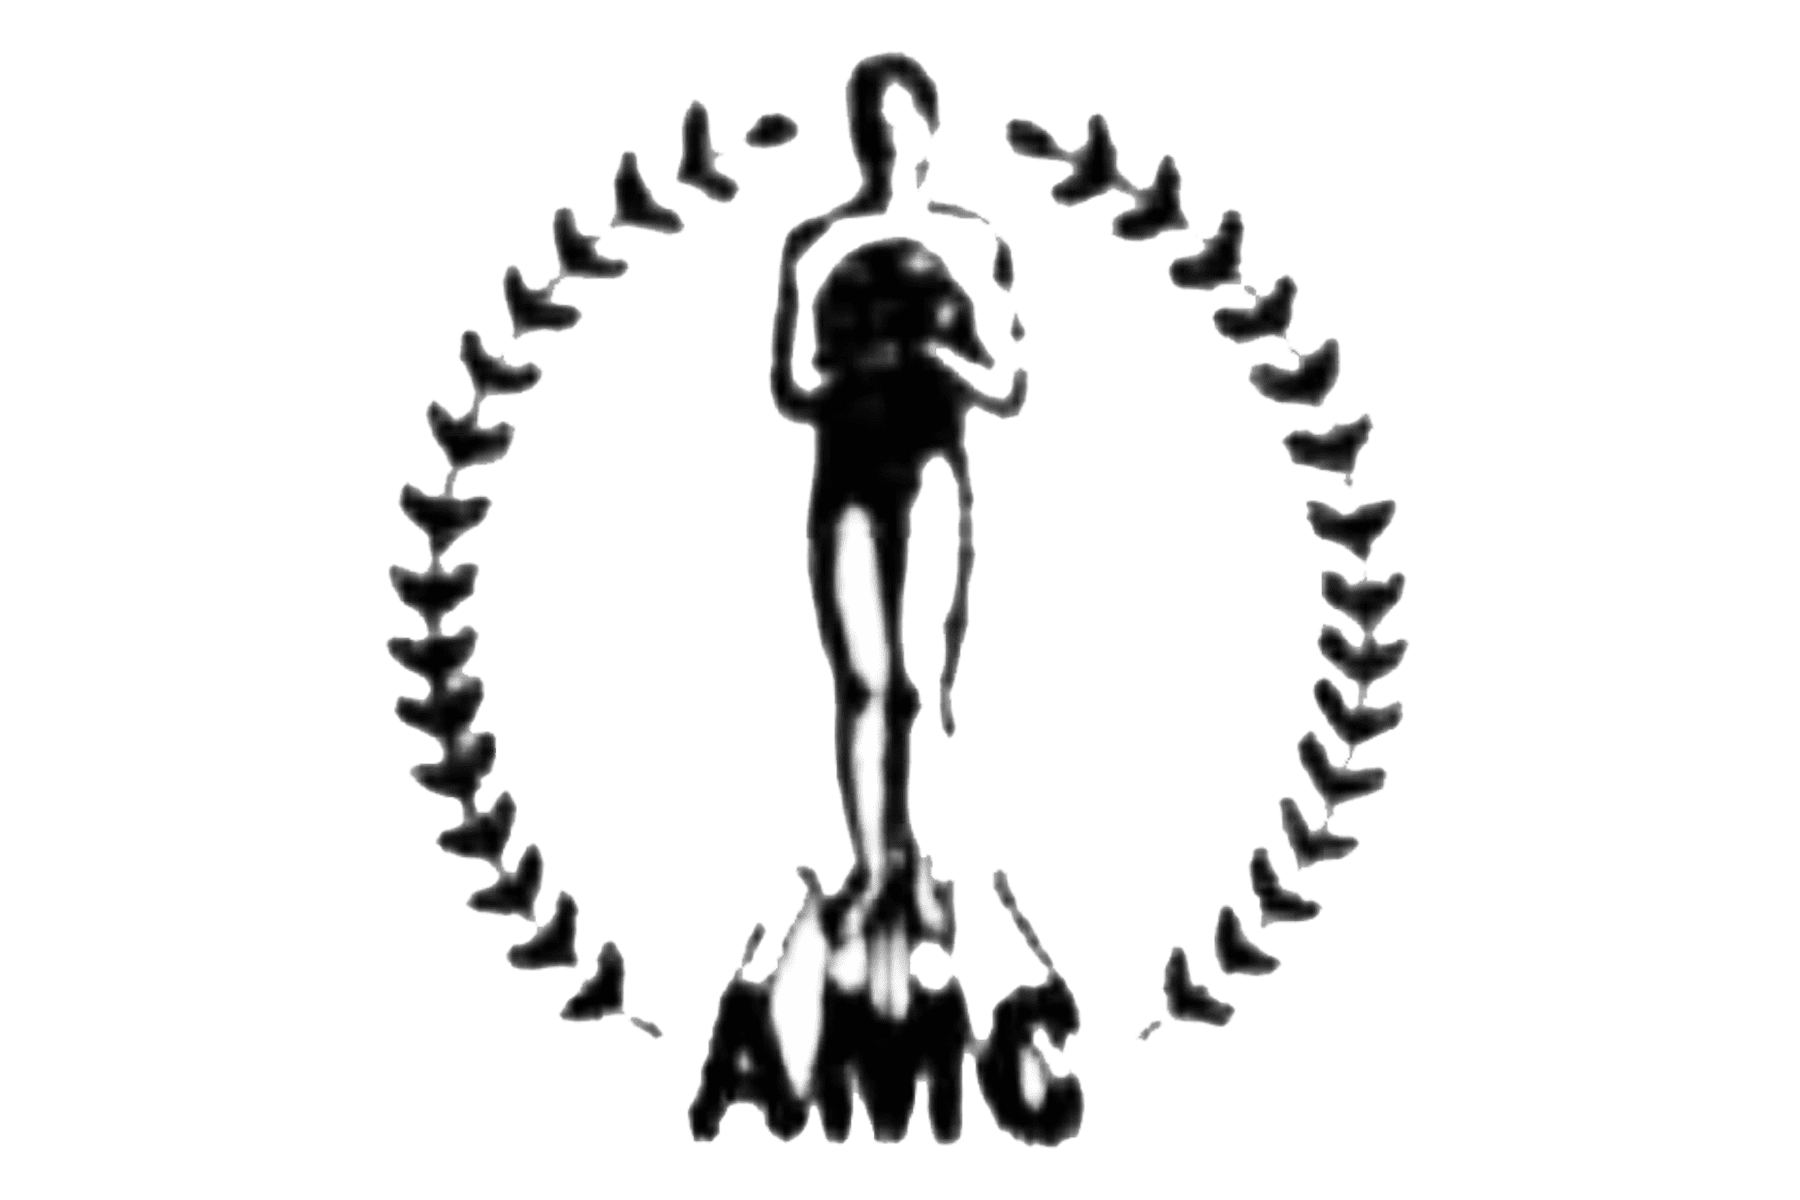 amc theaters logo